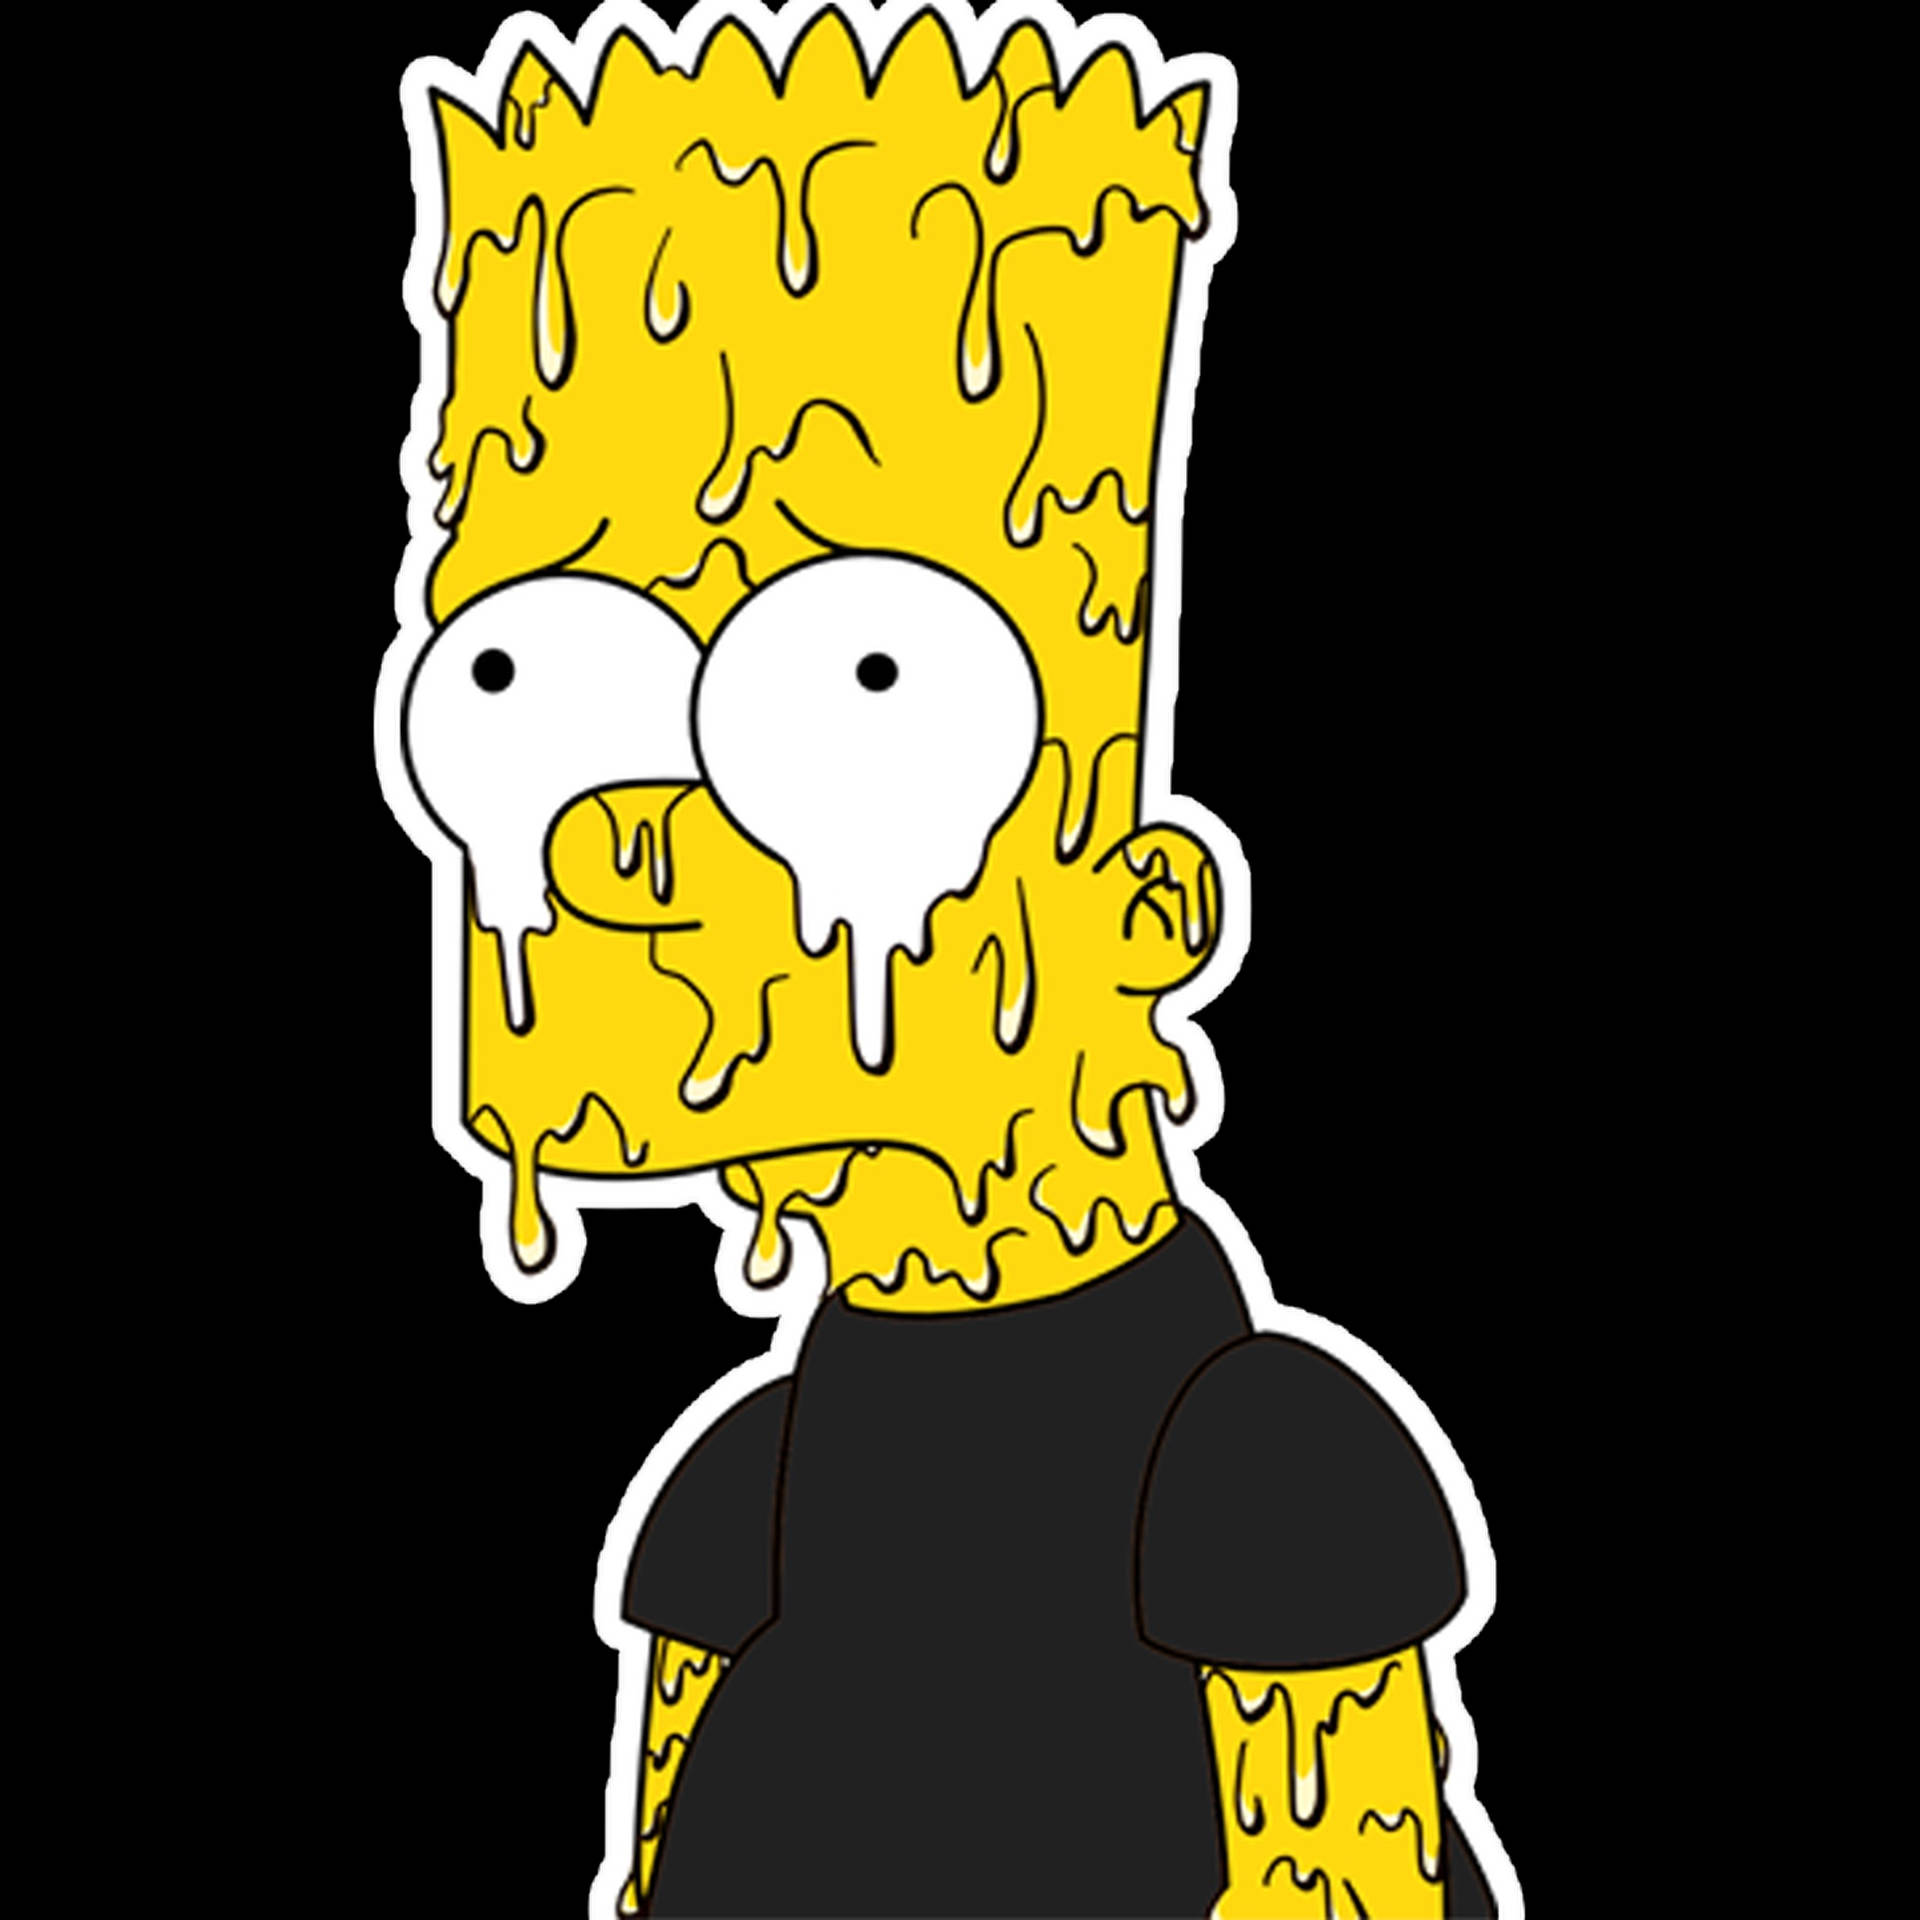 100+] Sad Bart Simpson Phone Wallpapers